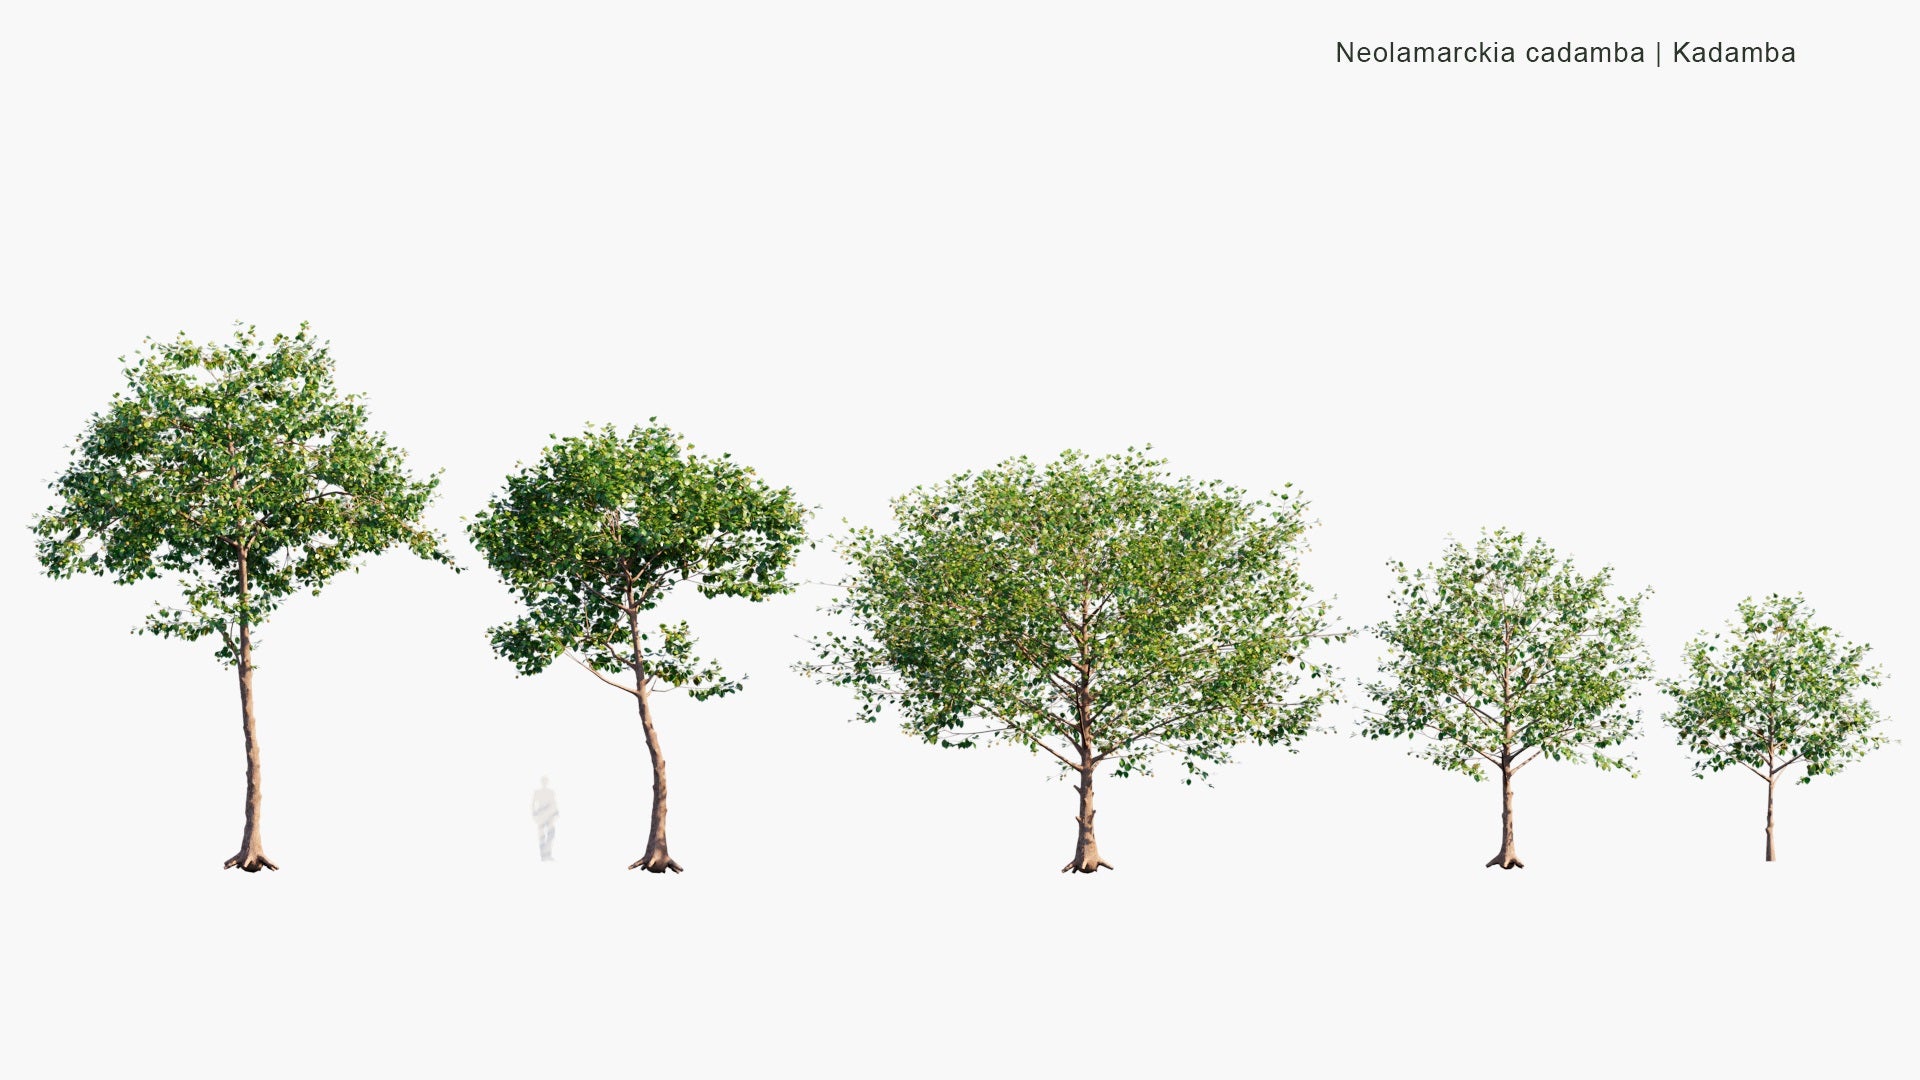 Low Poly Neolamarckia Cadamba - Kadamba, Burflower-Tree, Laran, Leichhardt Pine (3D Model)